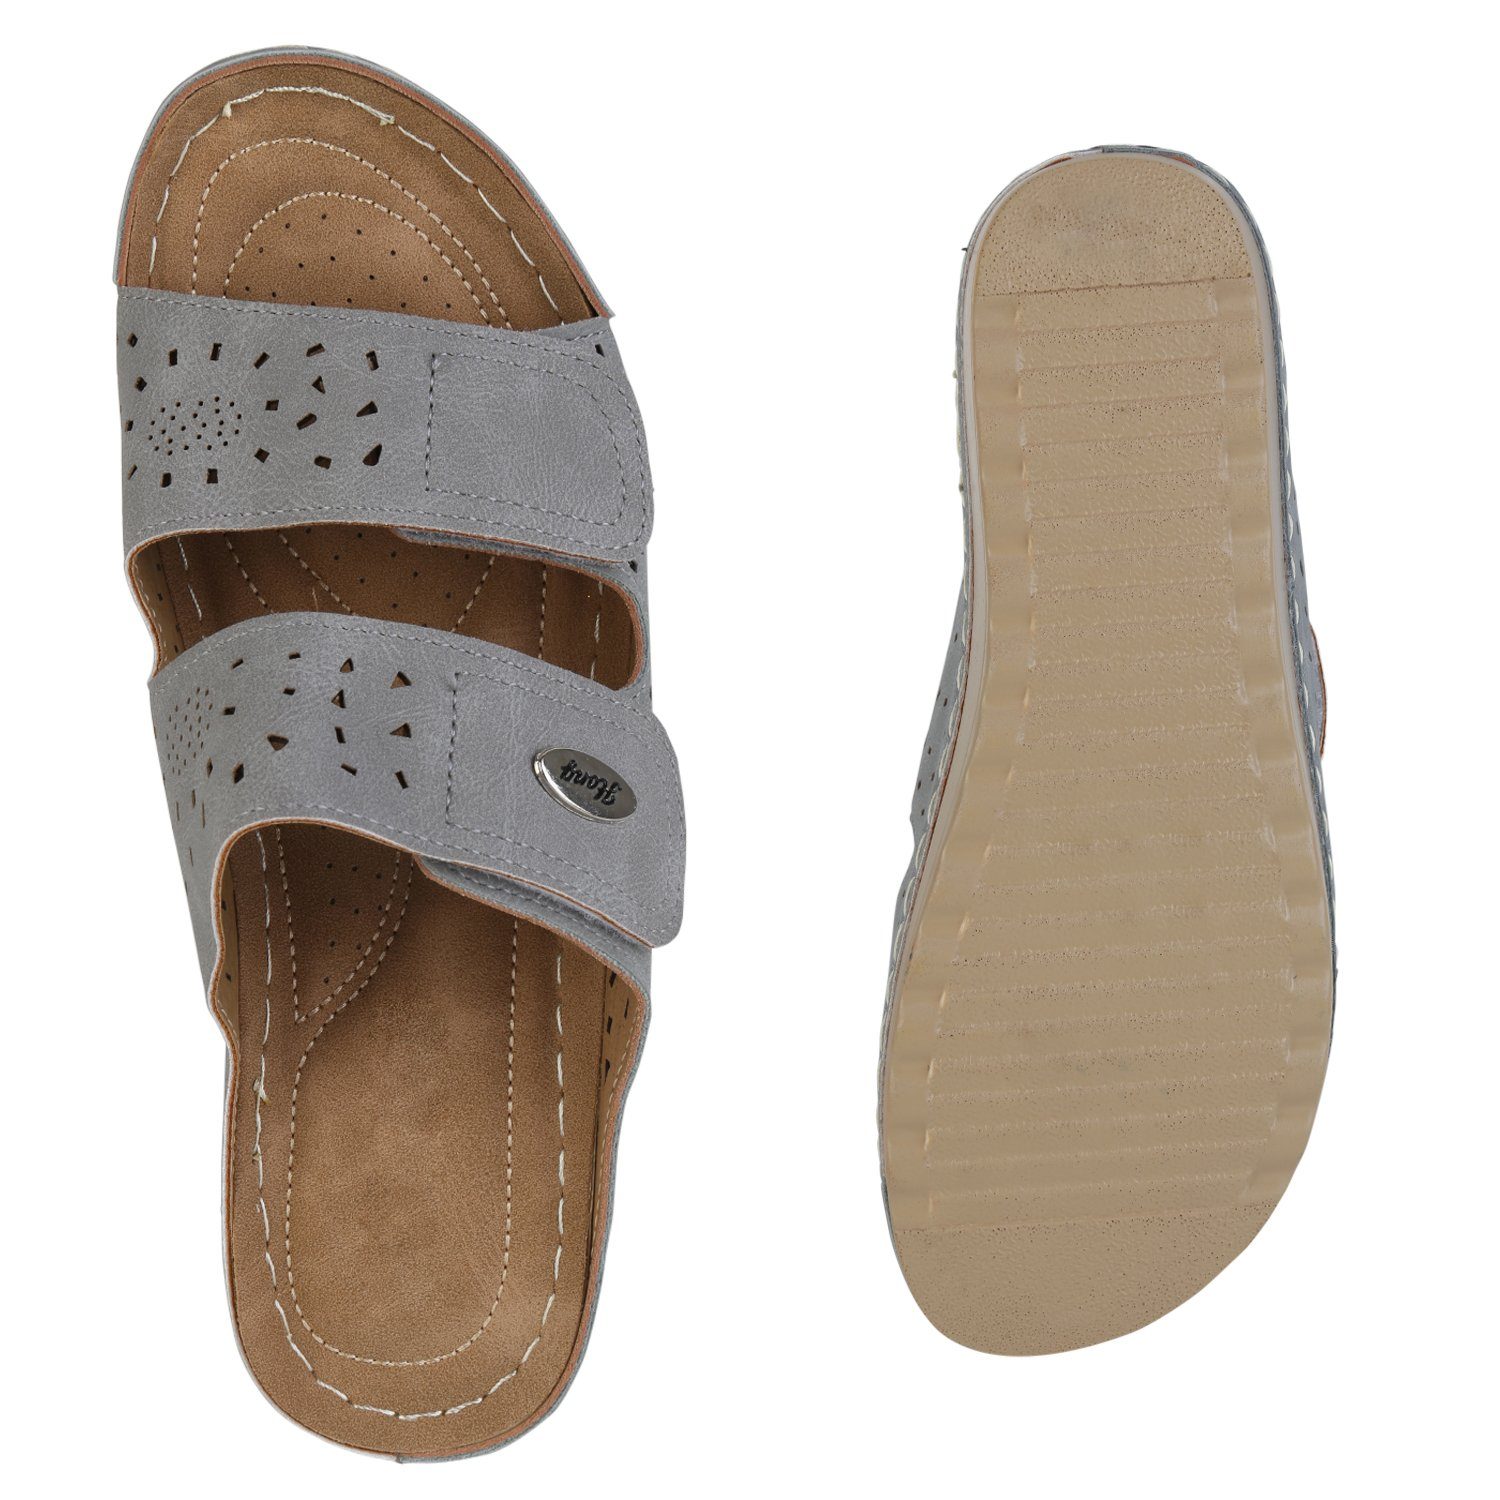 VAN HILL 840317 Sandalette Grau Schuhe